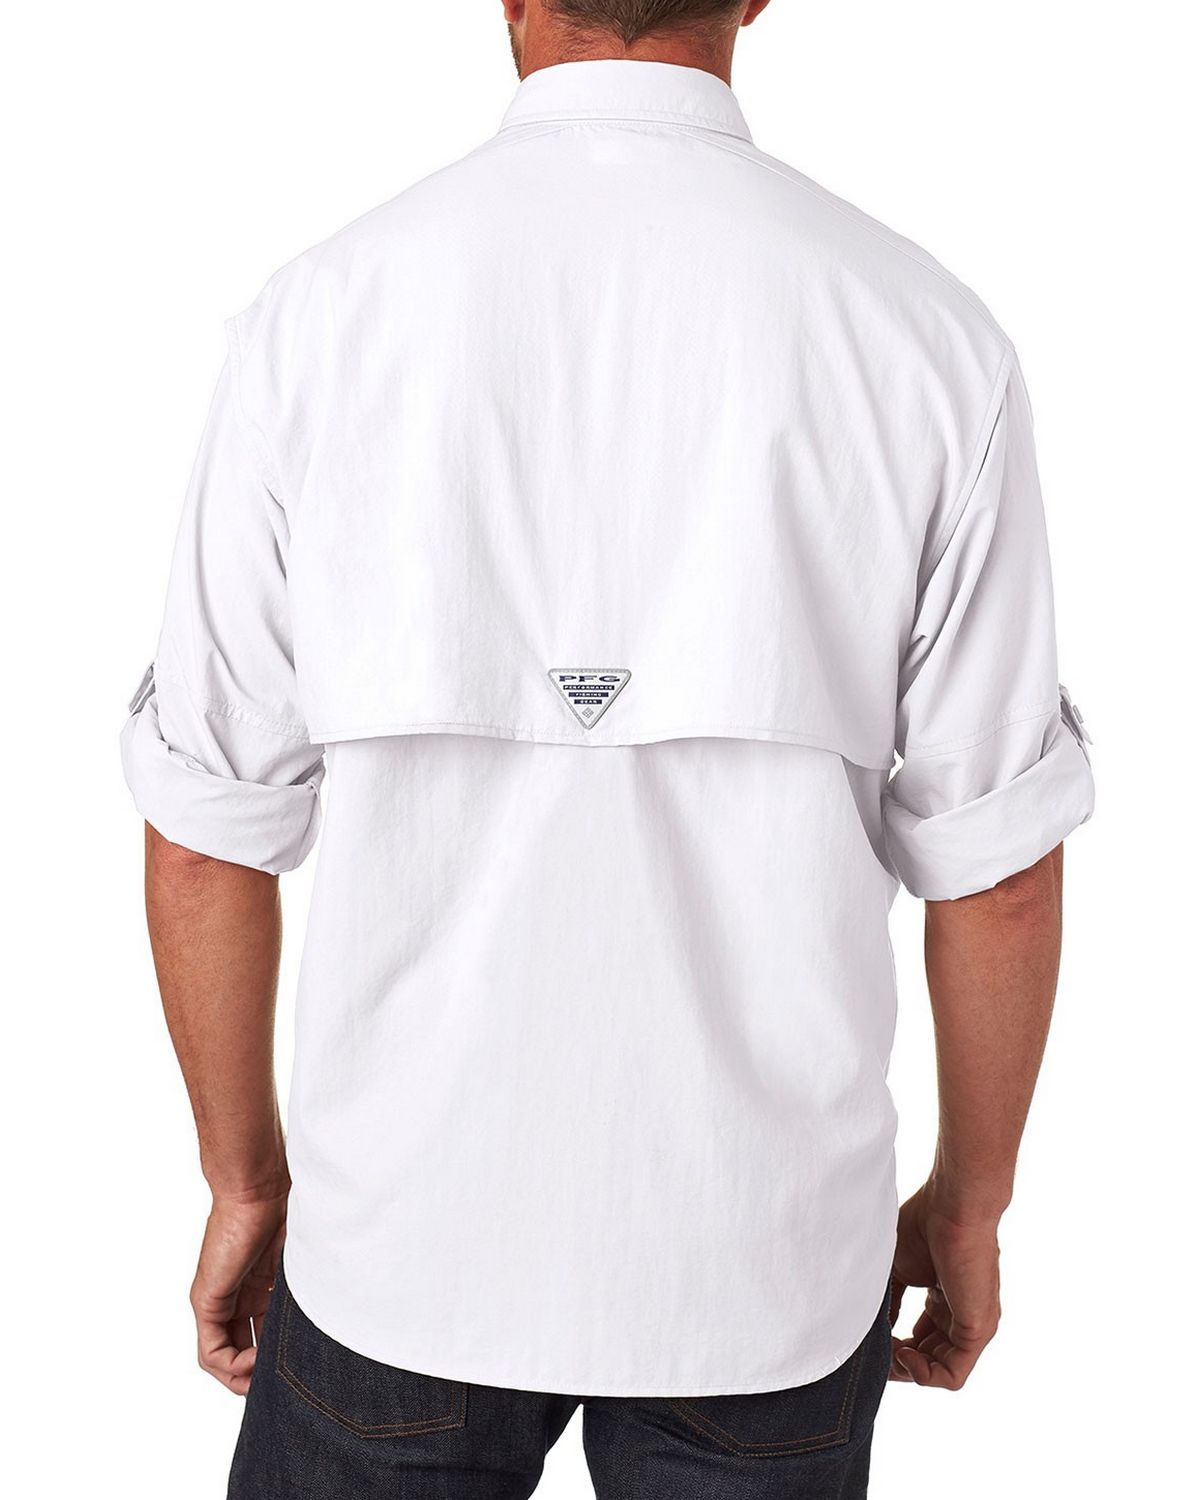 Columbia 7048 - Men's Bahama II Long-Sleeve Shirt - COOL GREY - L